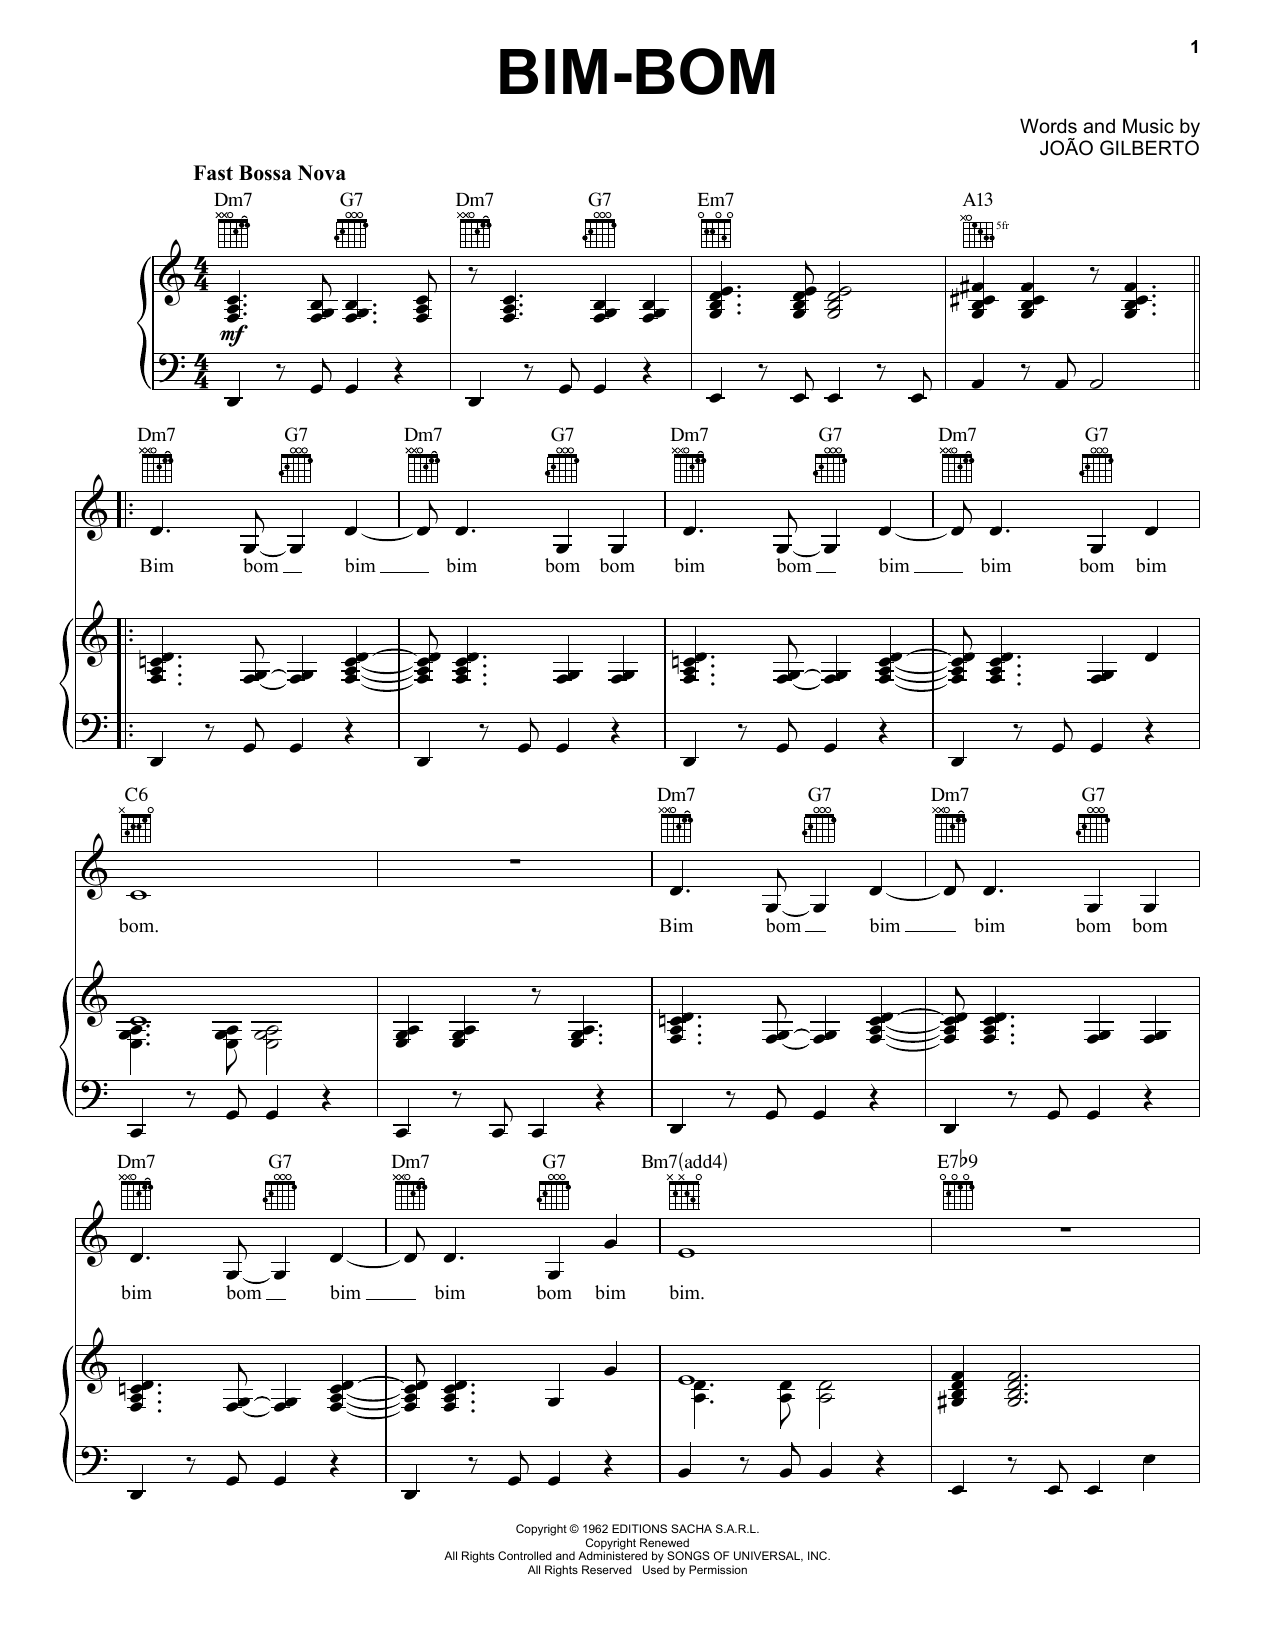 Joao Gilberto Bim-Bom Sheet Music Notes & Chords for Real Book – Melody & Chords - Download or Print PDF